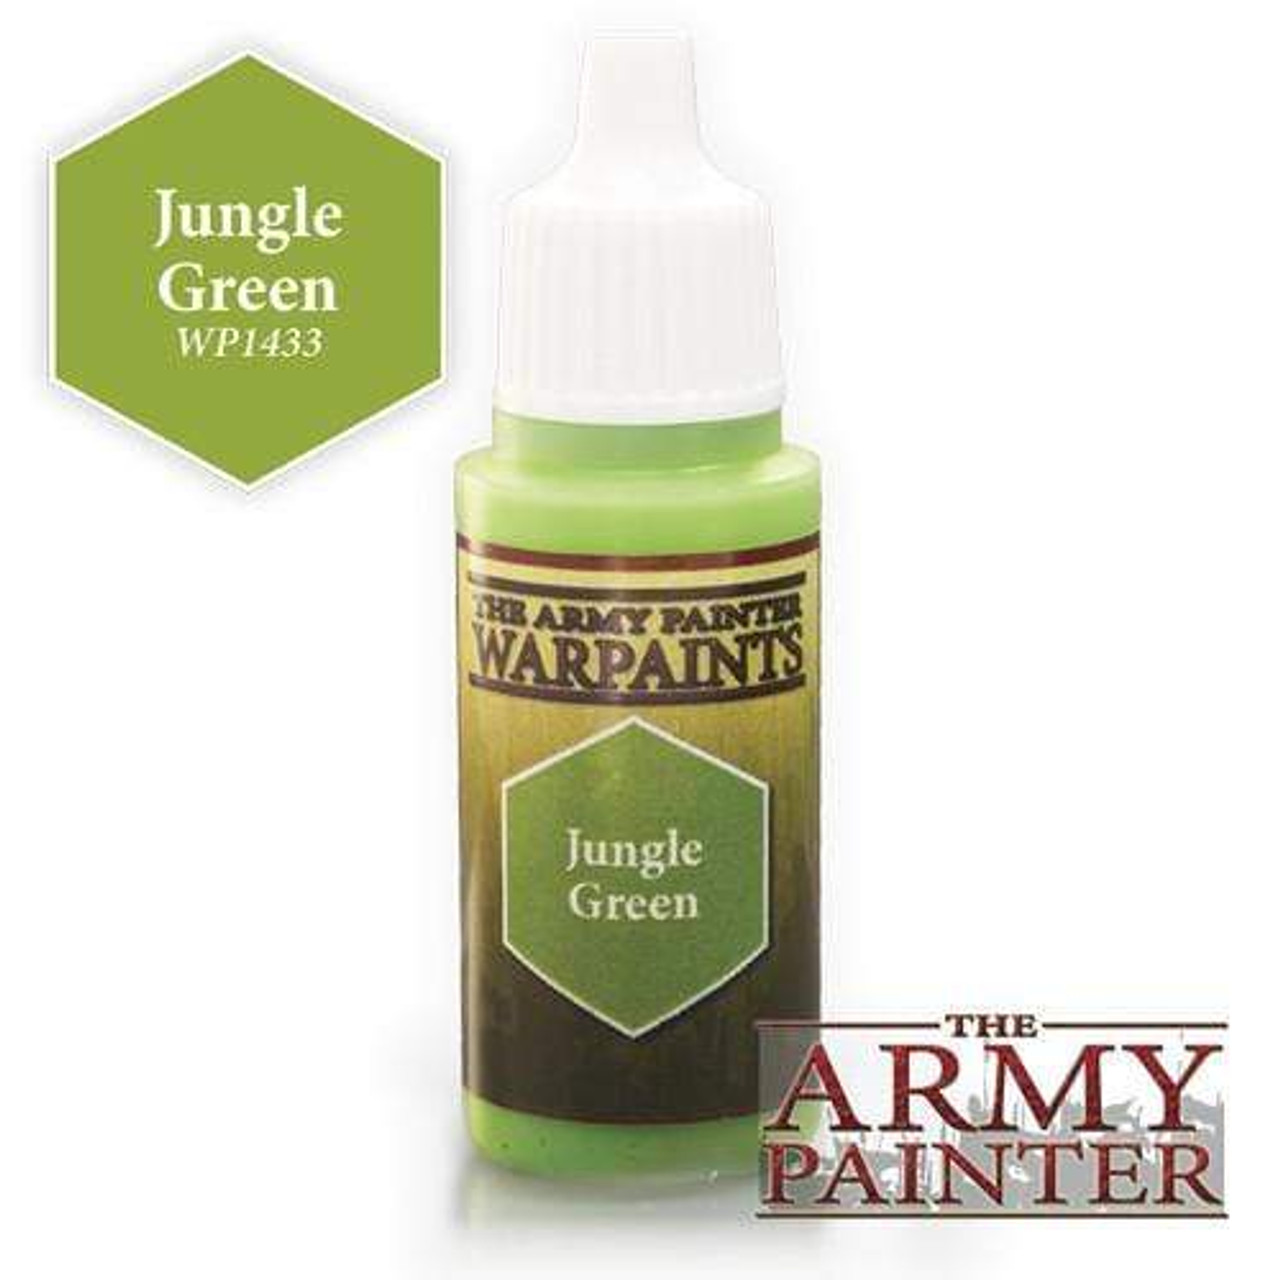 Army Painter Warpaint: Jungle Green